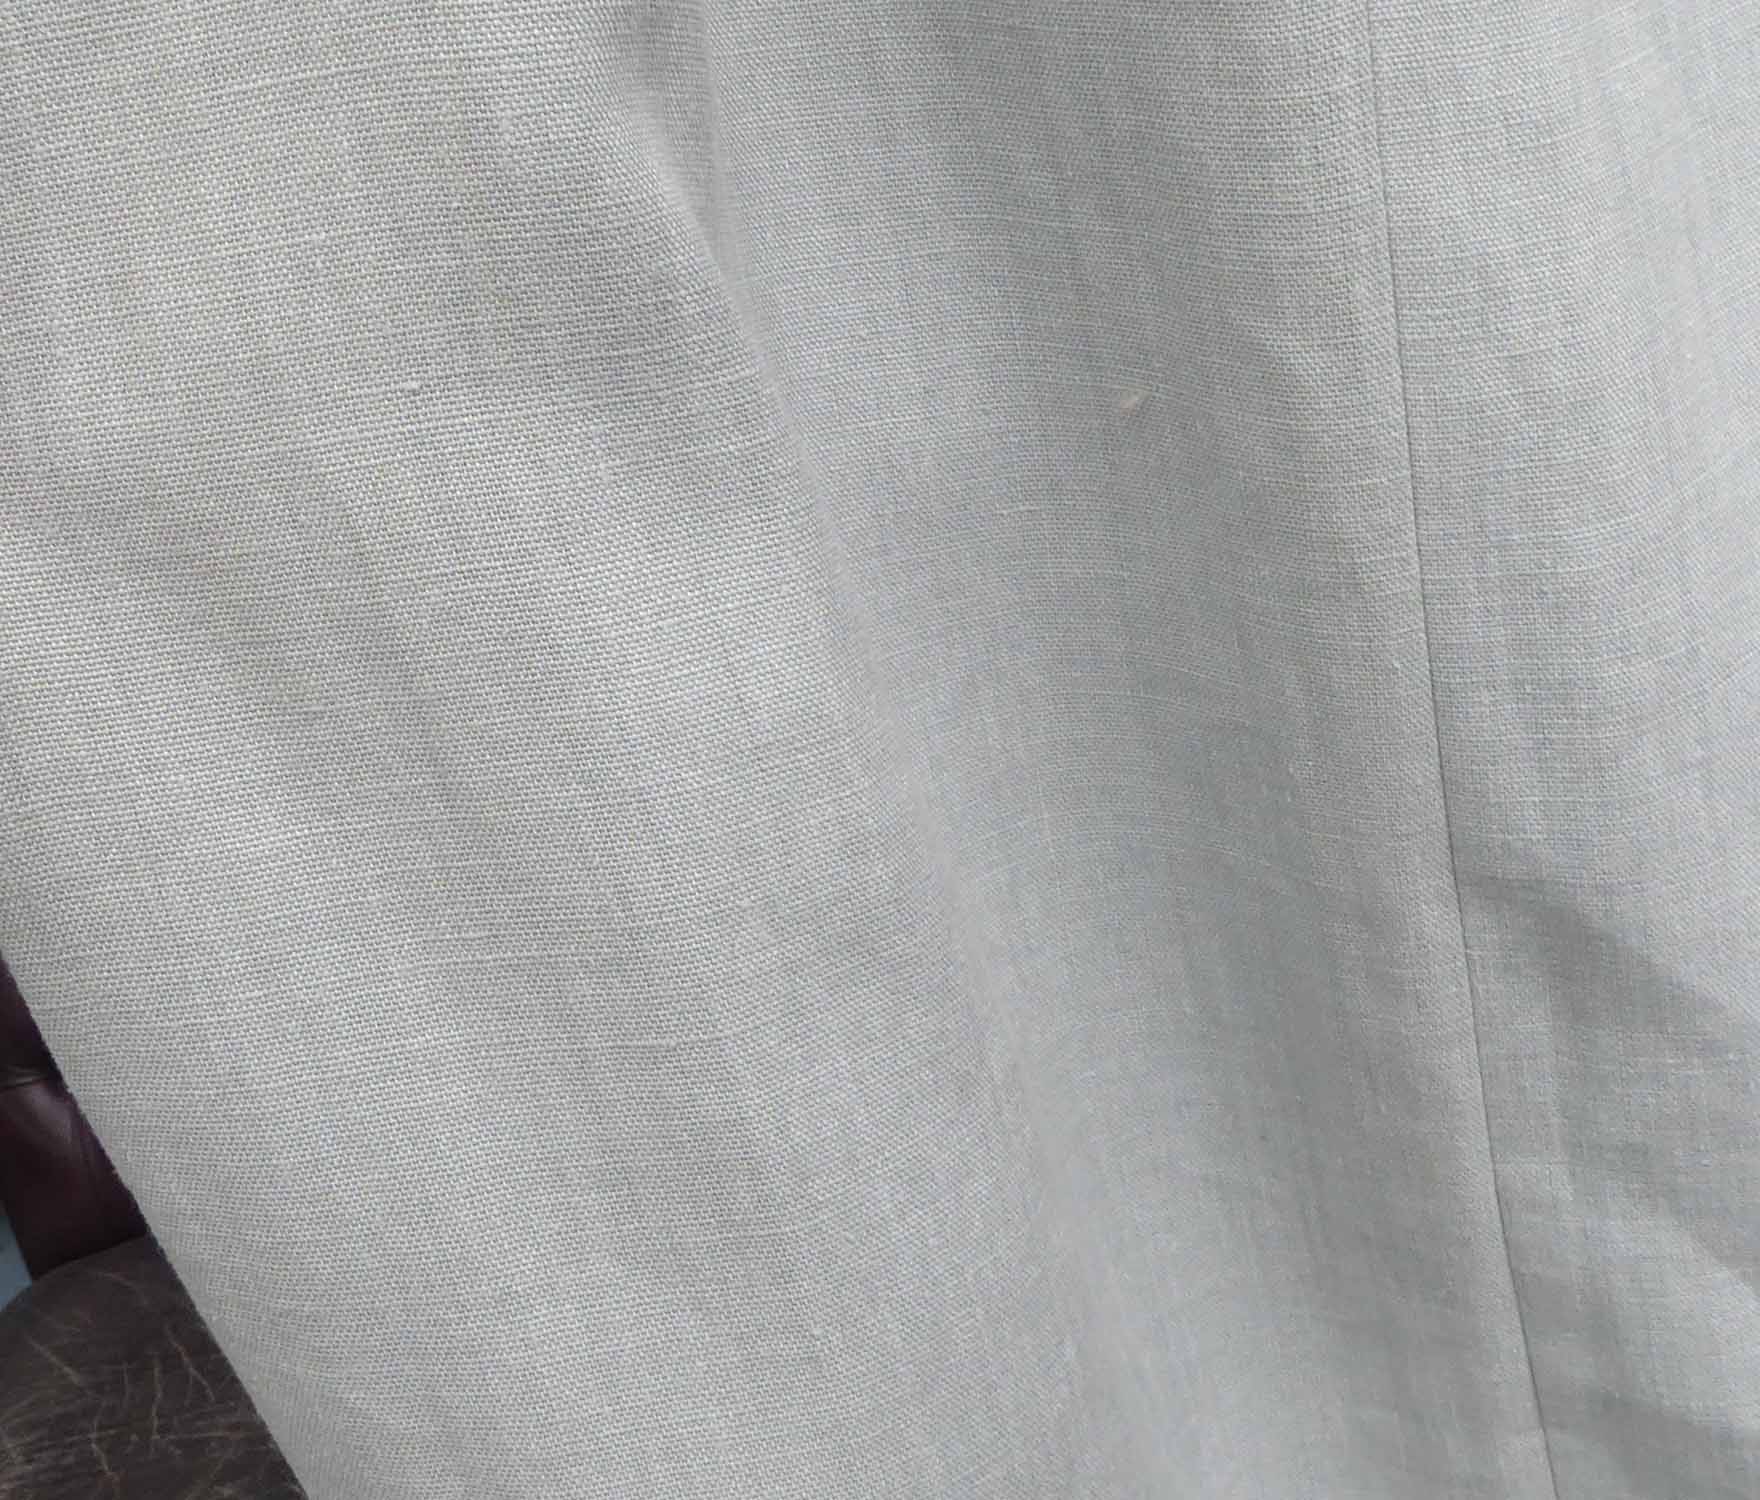 CURTAINS, a pair, contemporary, grey fabric, 300cm Drop x 85cm gathered ...